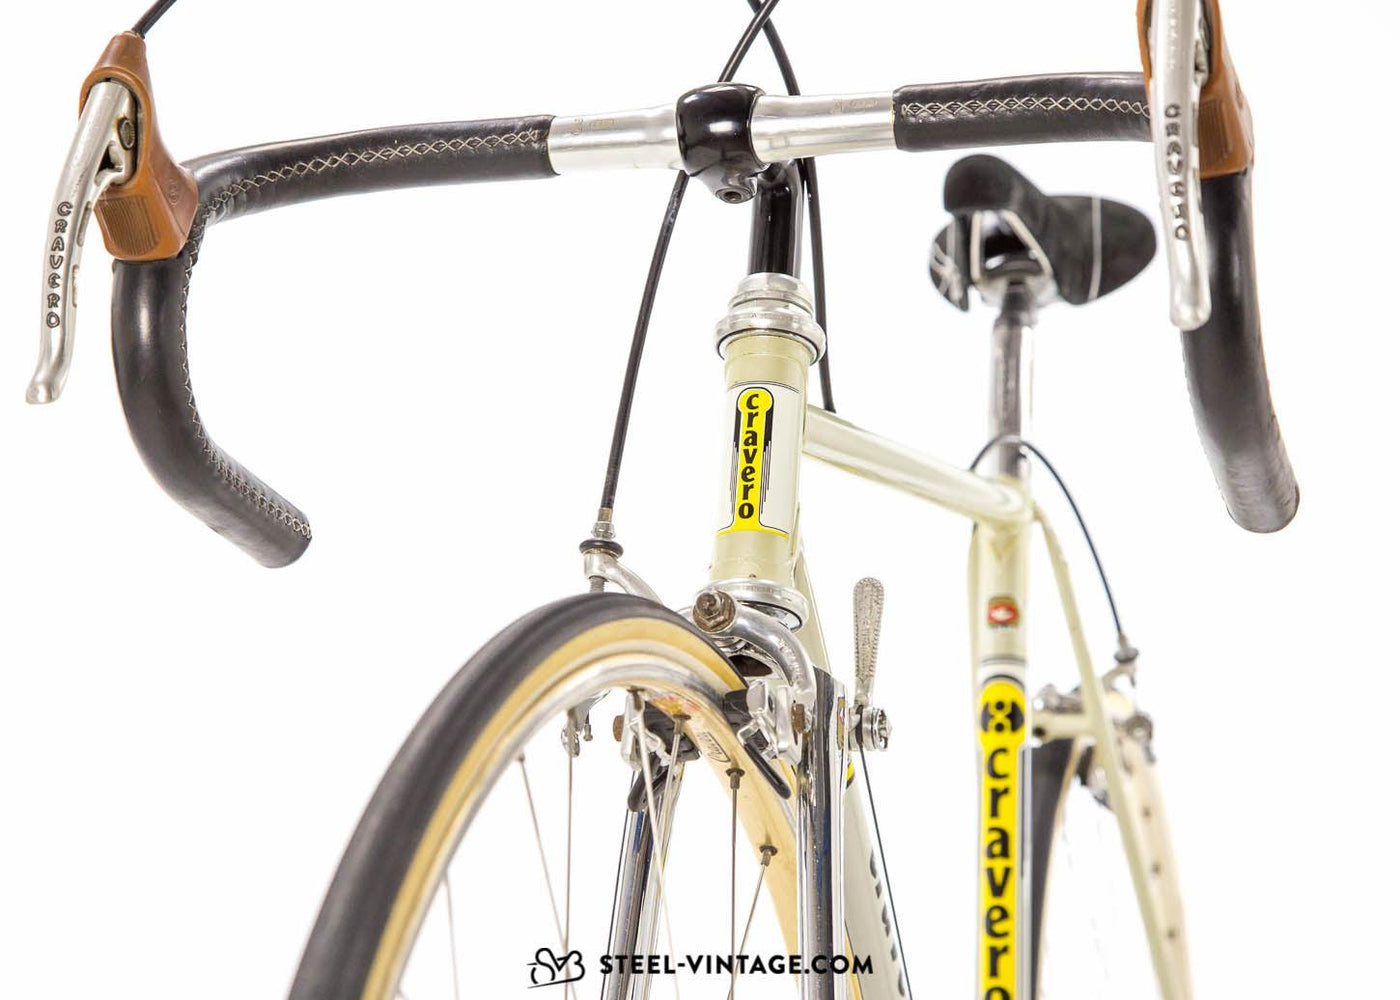 Cravero Super Classic Lightweight 1980s - Steel Vintage Bikes